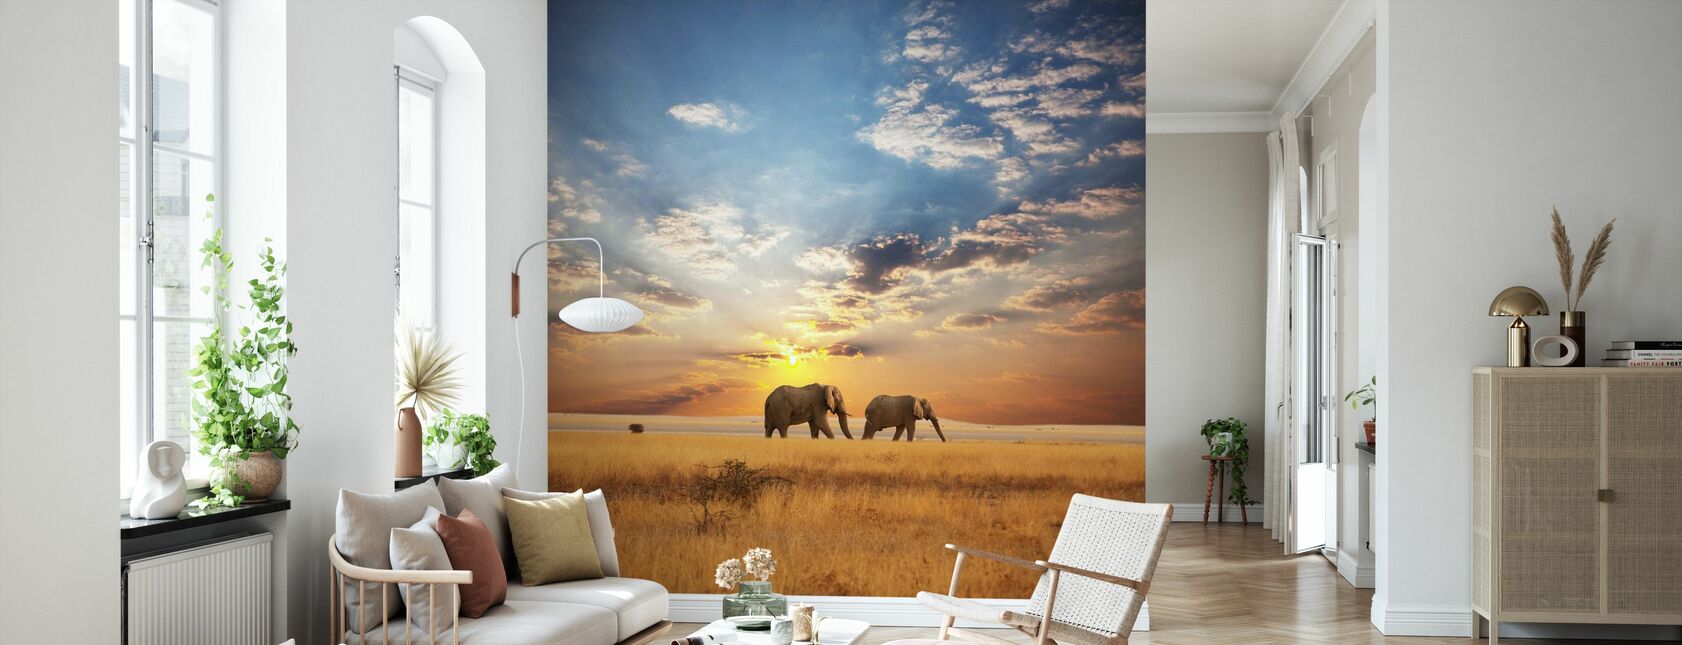 Savannah Sunset - Wallpaper - Living Room